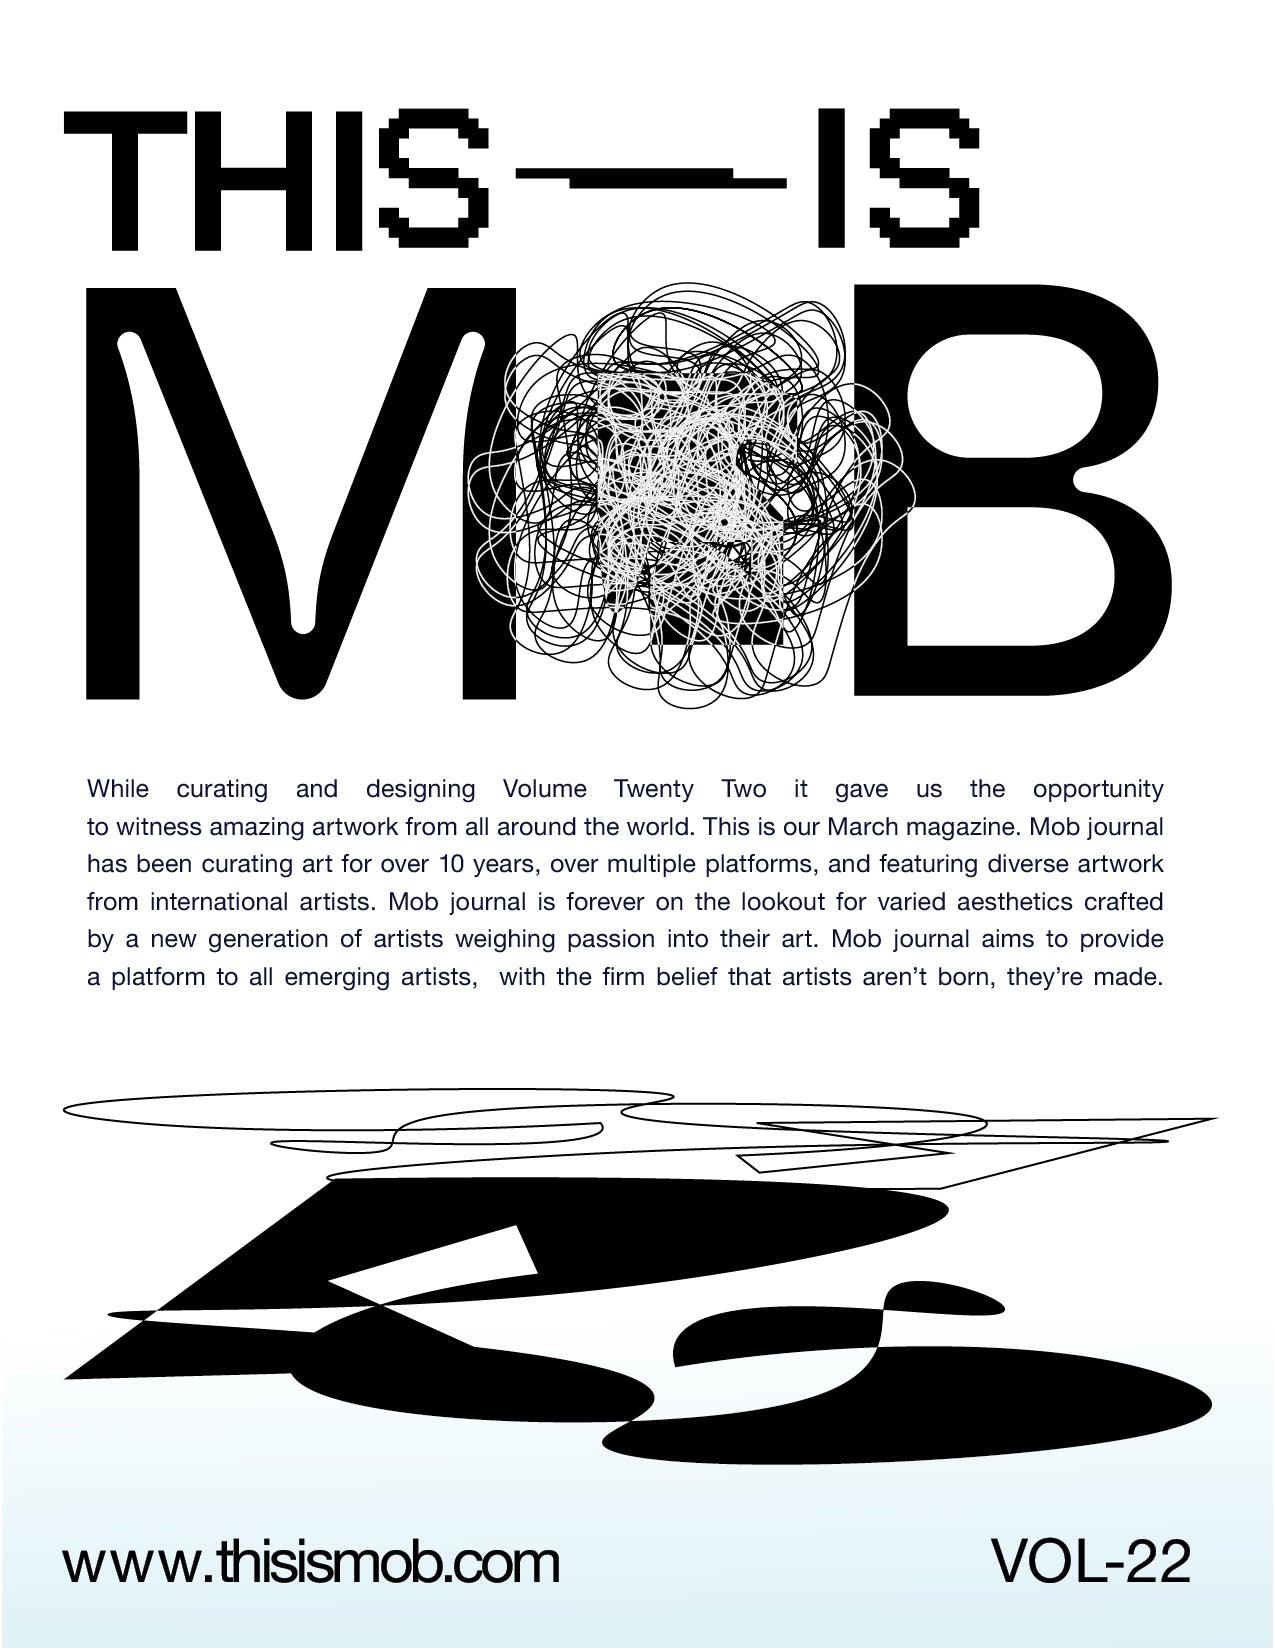 MOB JOURNAL | VOLUME TWENTY TWO | ISSUE #53 - Mob Journal